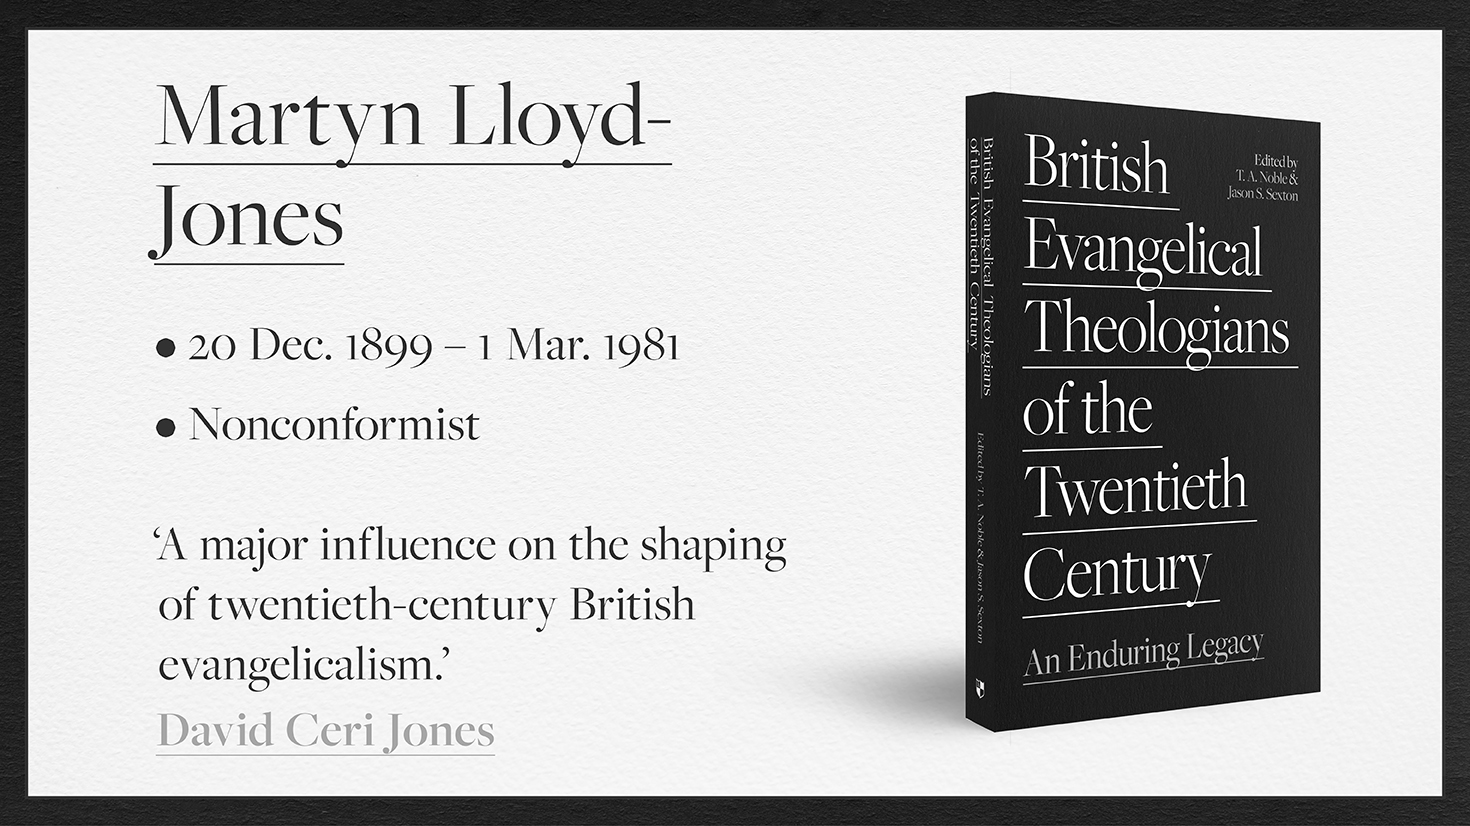 Martyn Lloyd-Jones: British Evangelical Theologian of the Twentieth Century